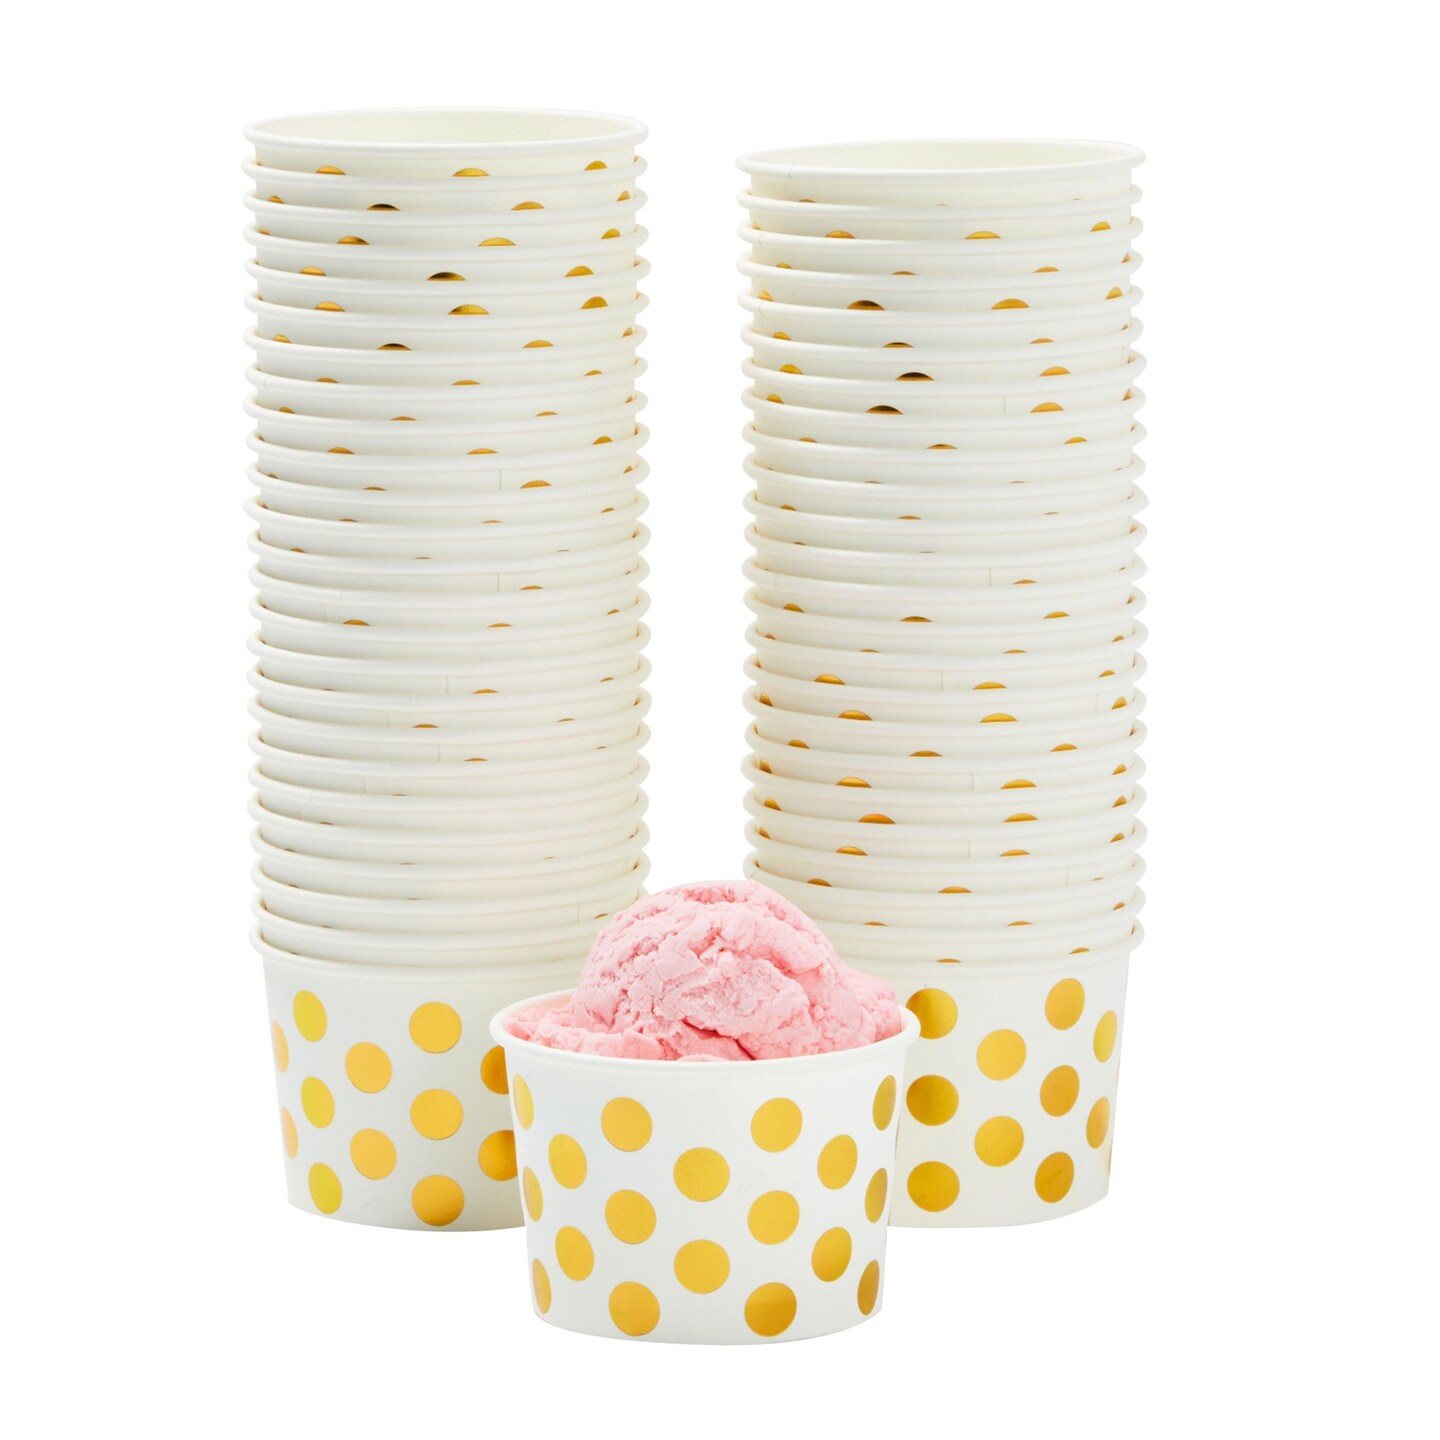 50-Pack Paper Ice Cream Cups for Frozen Yogurt, Sundae Bar, Parfaits, Treats, Diners, Restaurants, Bakeries, Disposable Dessert Bowls with Gold Foil Polka Dots (8 oz)